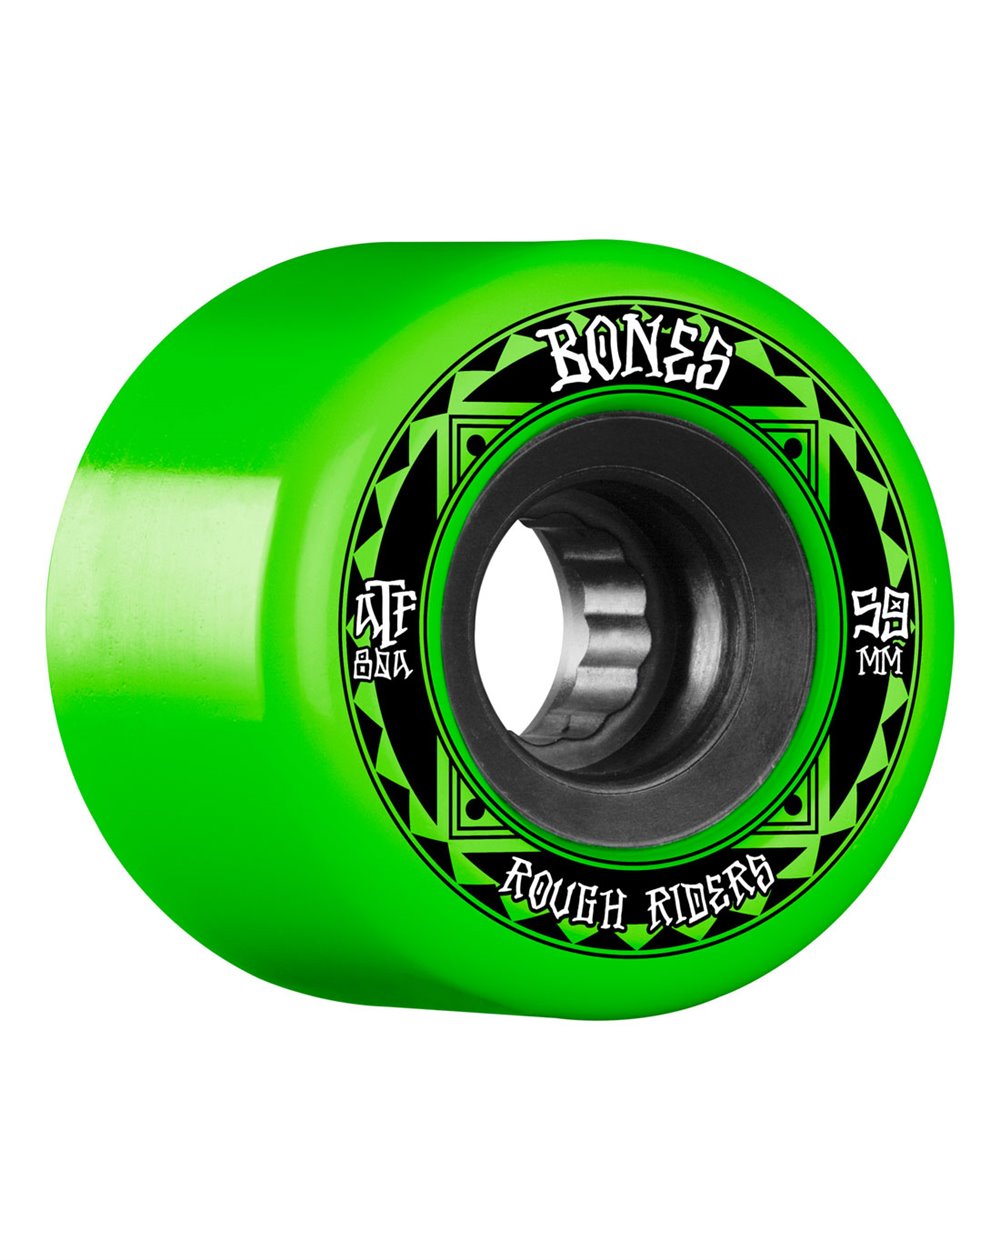 Bones Wheels ATF Rough Rider Runners 59mm 80A Skateboard Wheels Green pack of 4